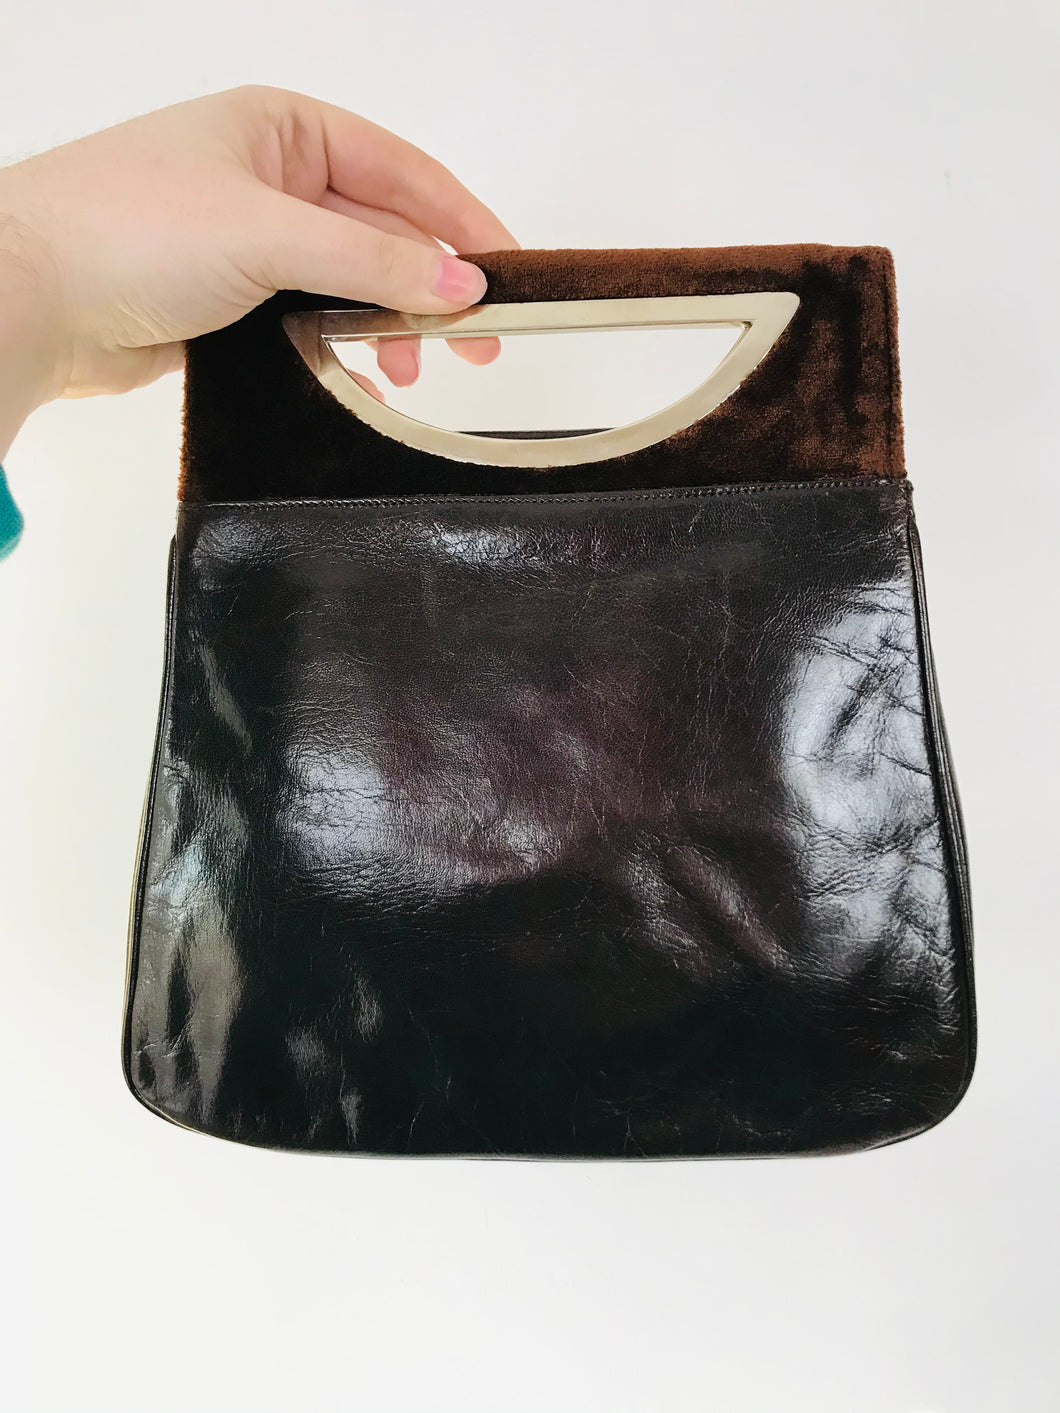 Cesare Piccini Charles Jourdan Women’s Leather Velvet Handbag Clutch Bag | Small | Brown